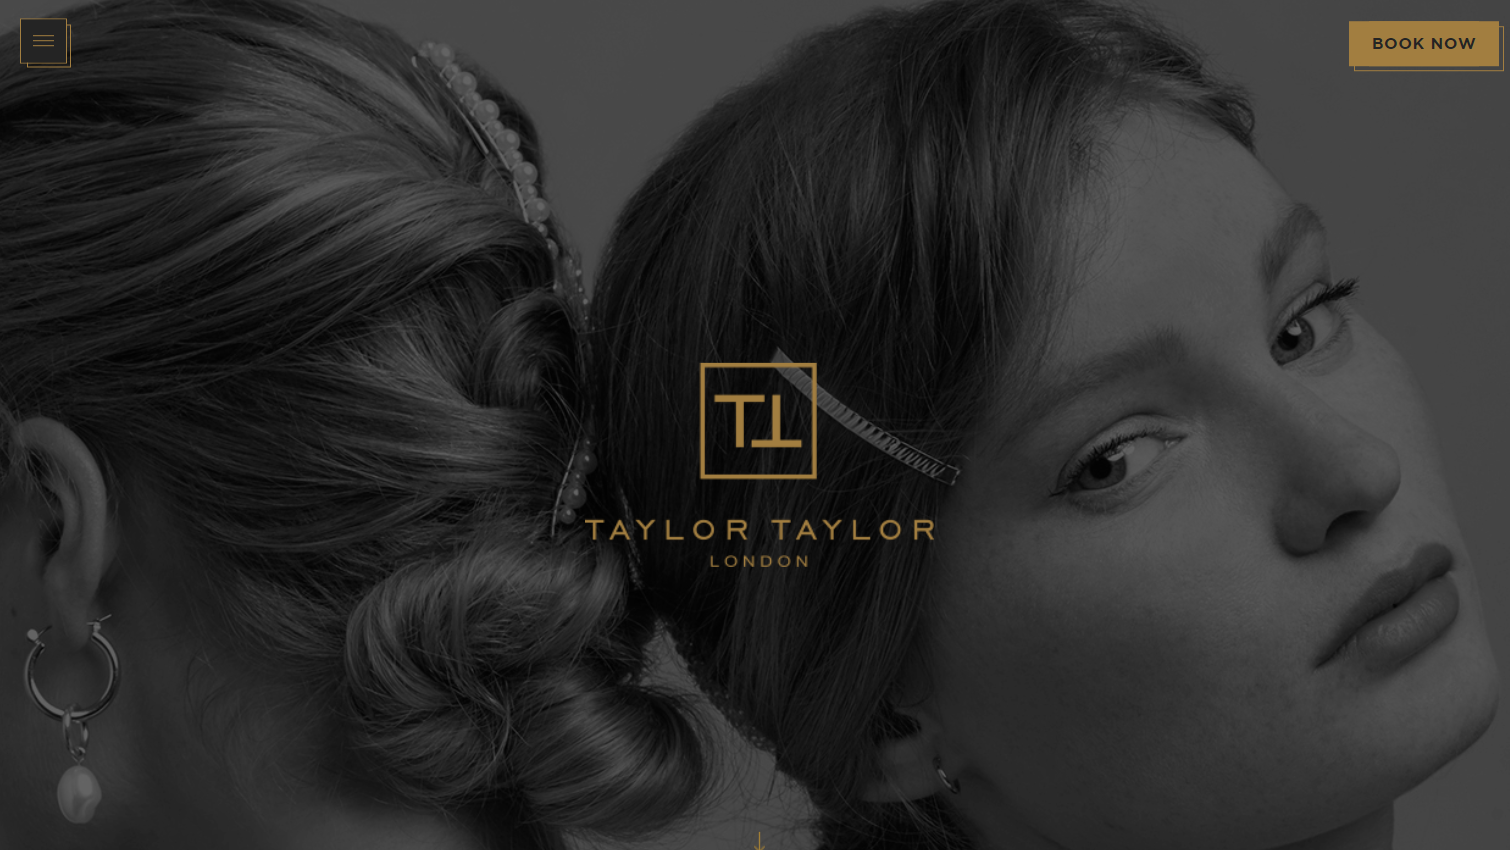 Taylor Taylor website